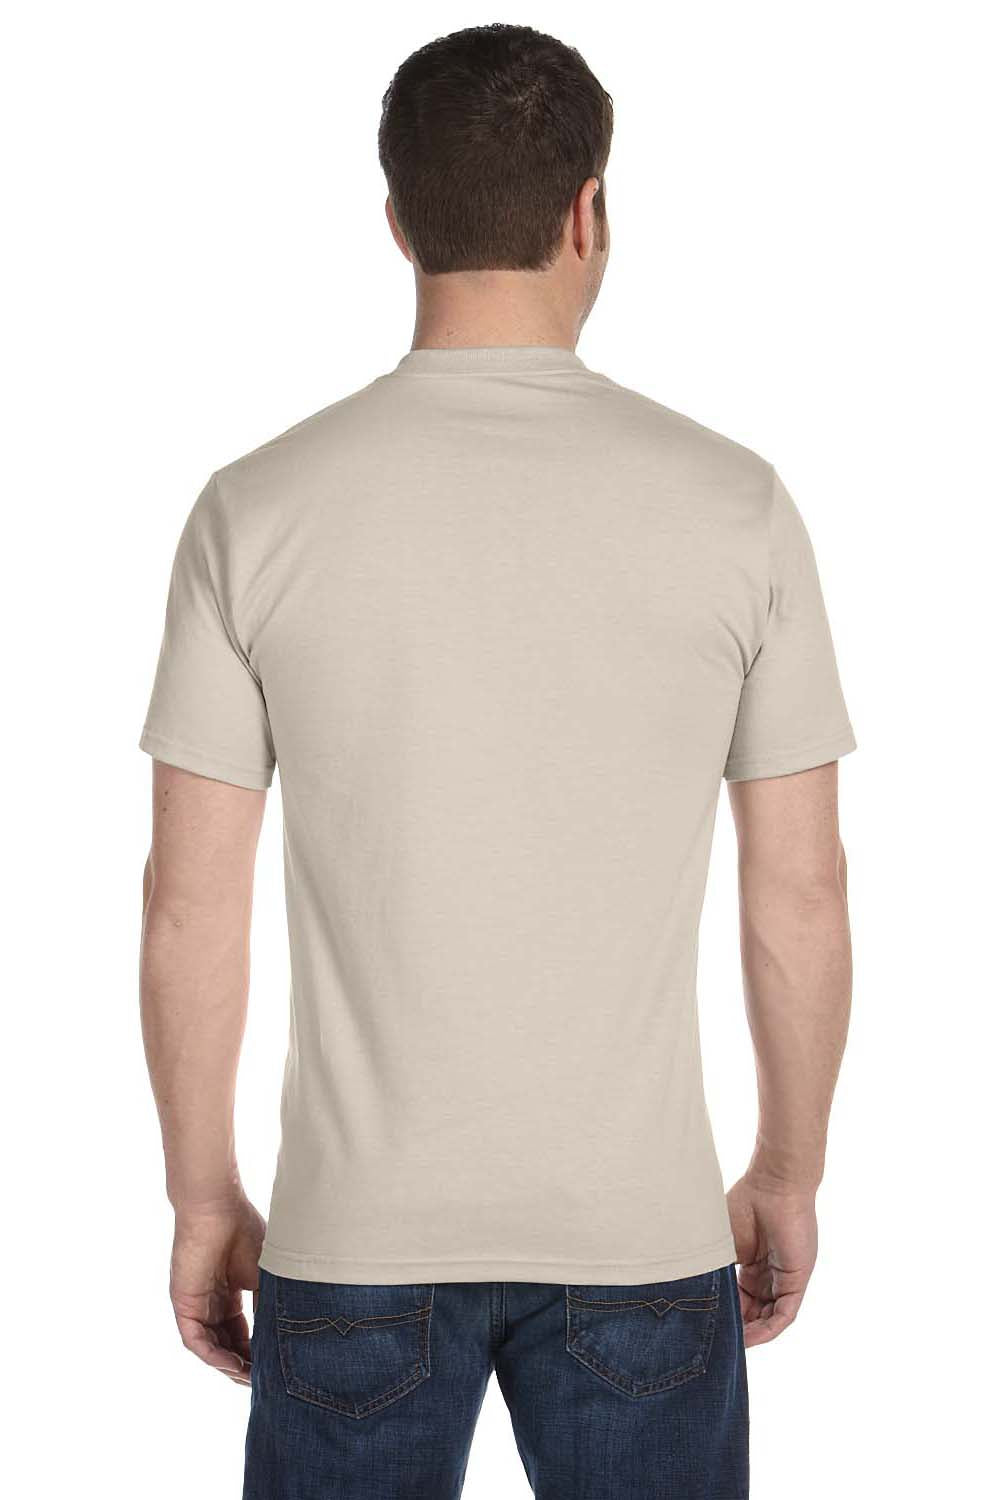 Gildan G800 Mens DryBlend Moisture Wicking Short Sleeve Crewneck T-Shirt Sand Brown Back